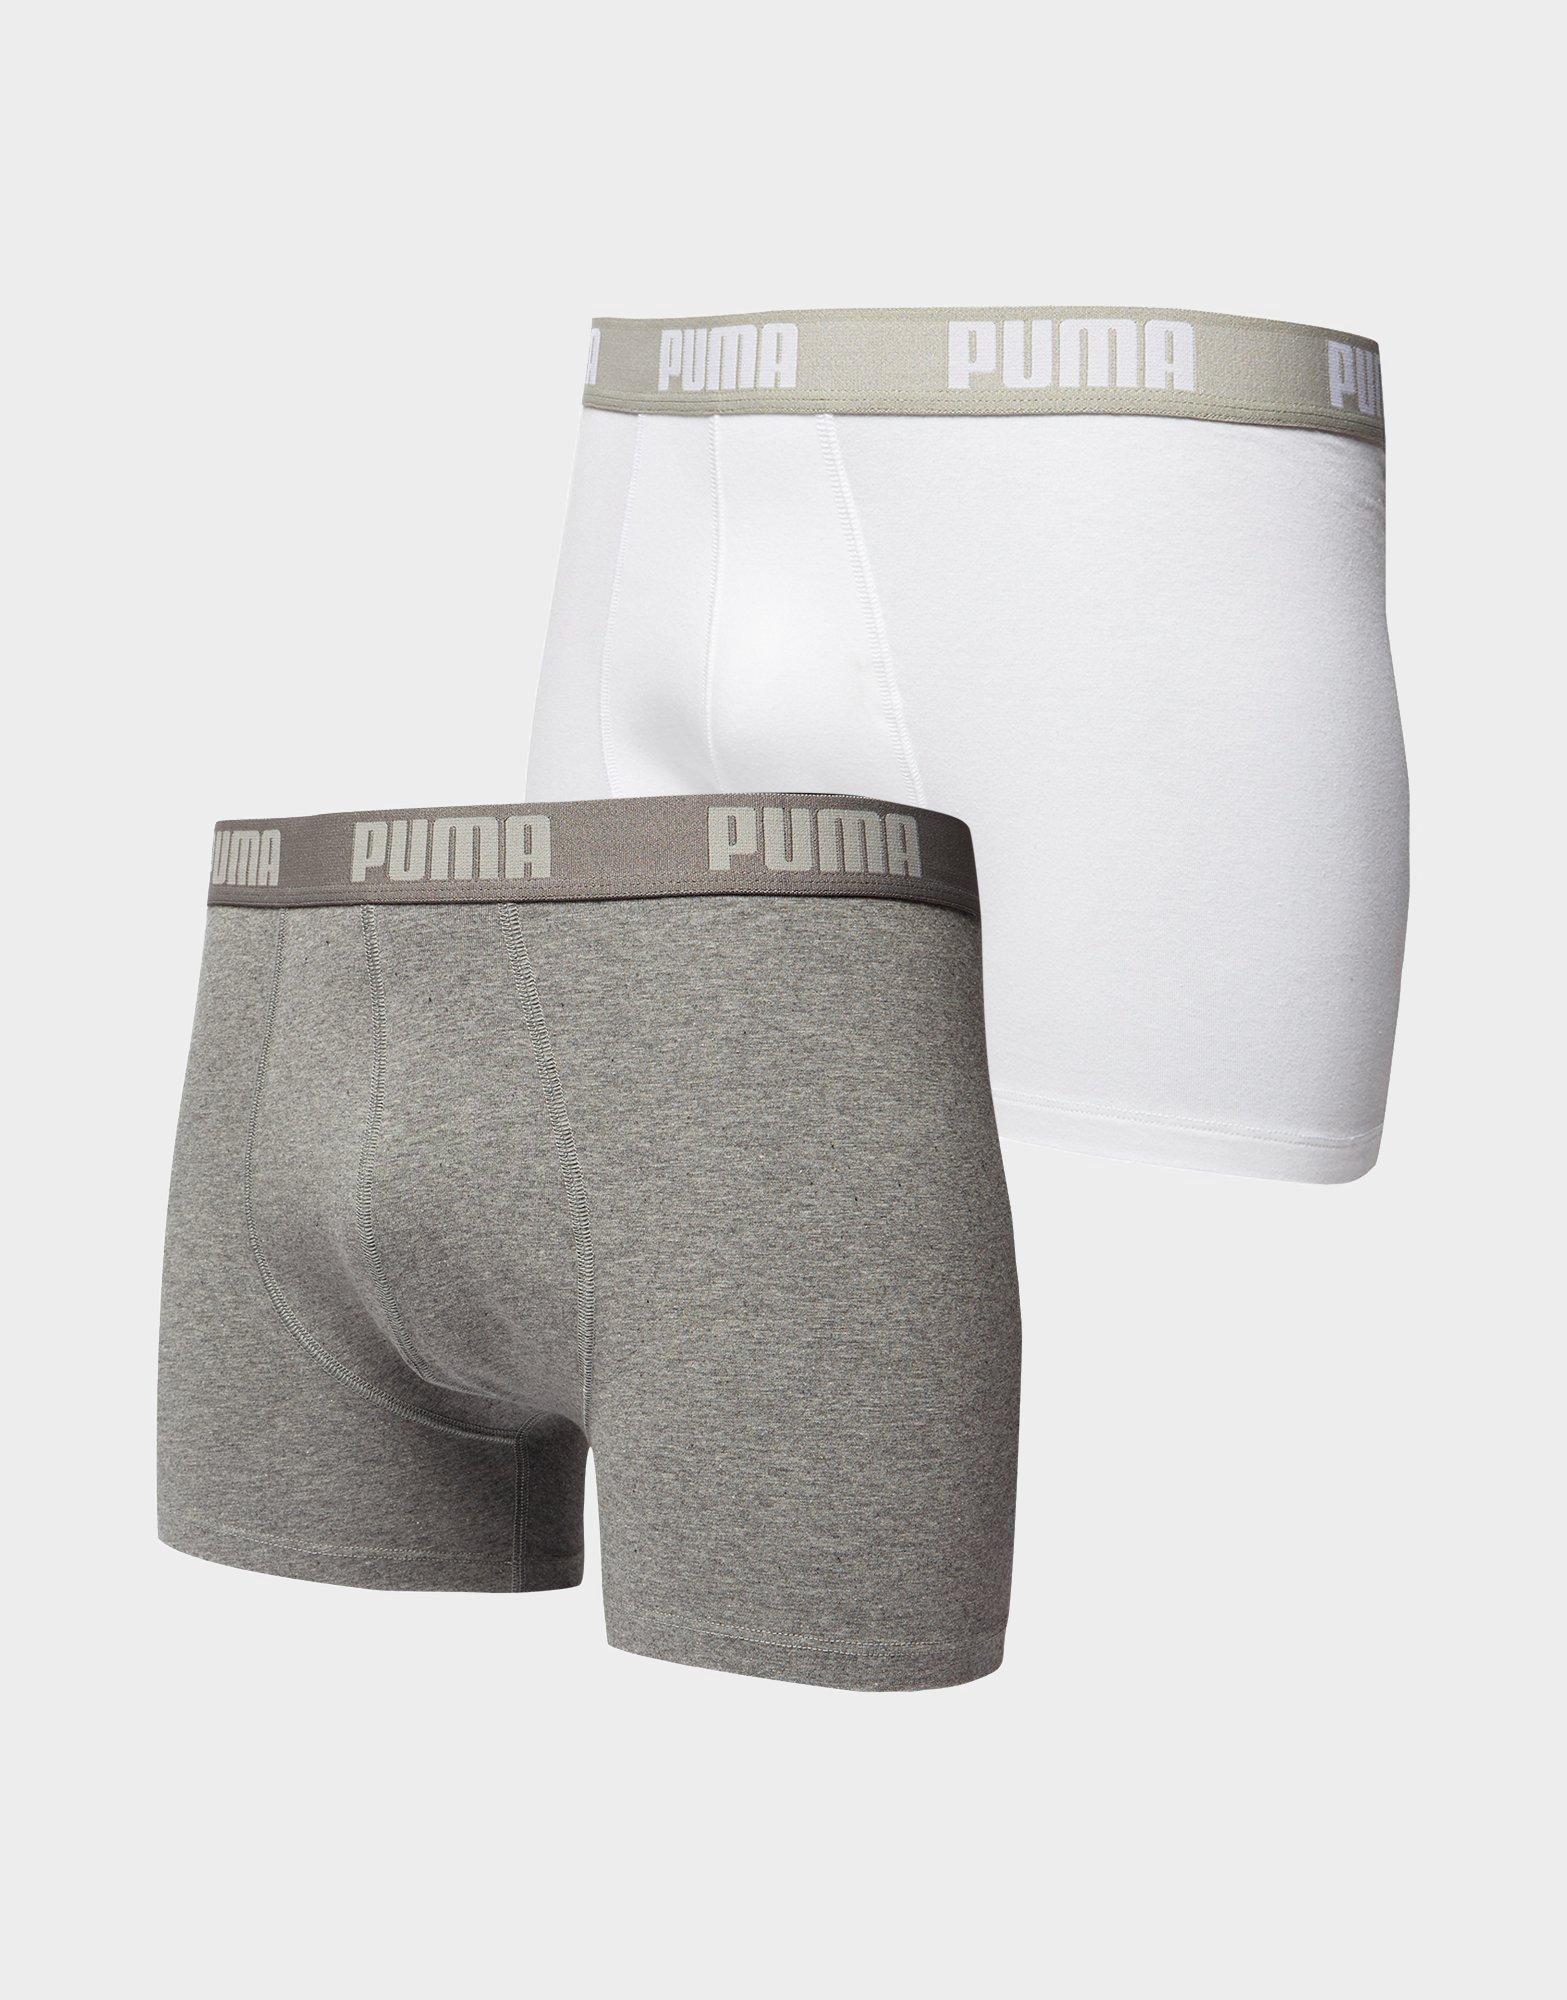 puma 2 boxers